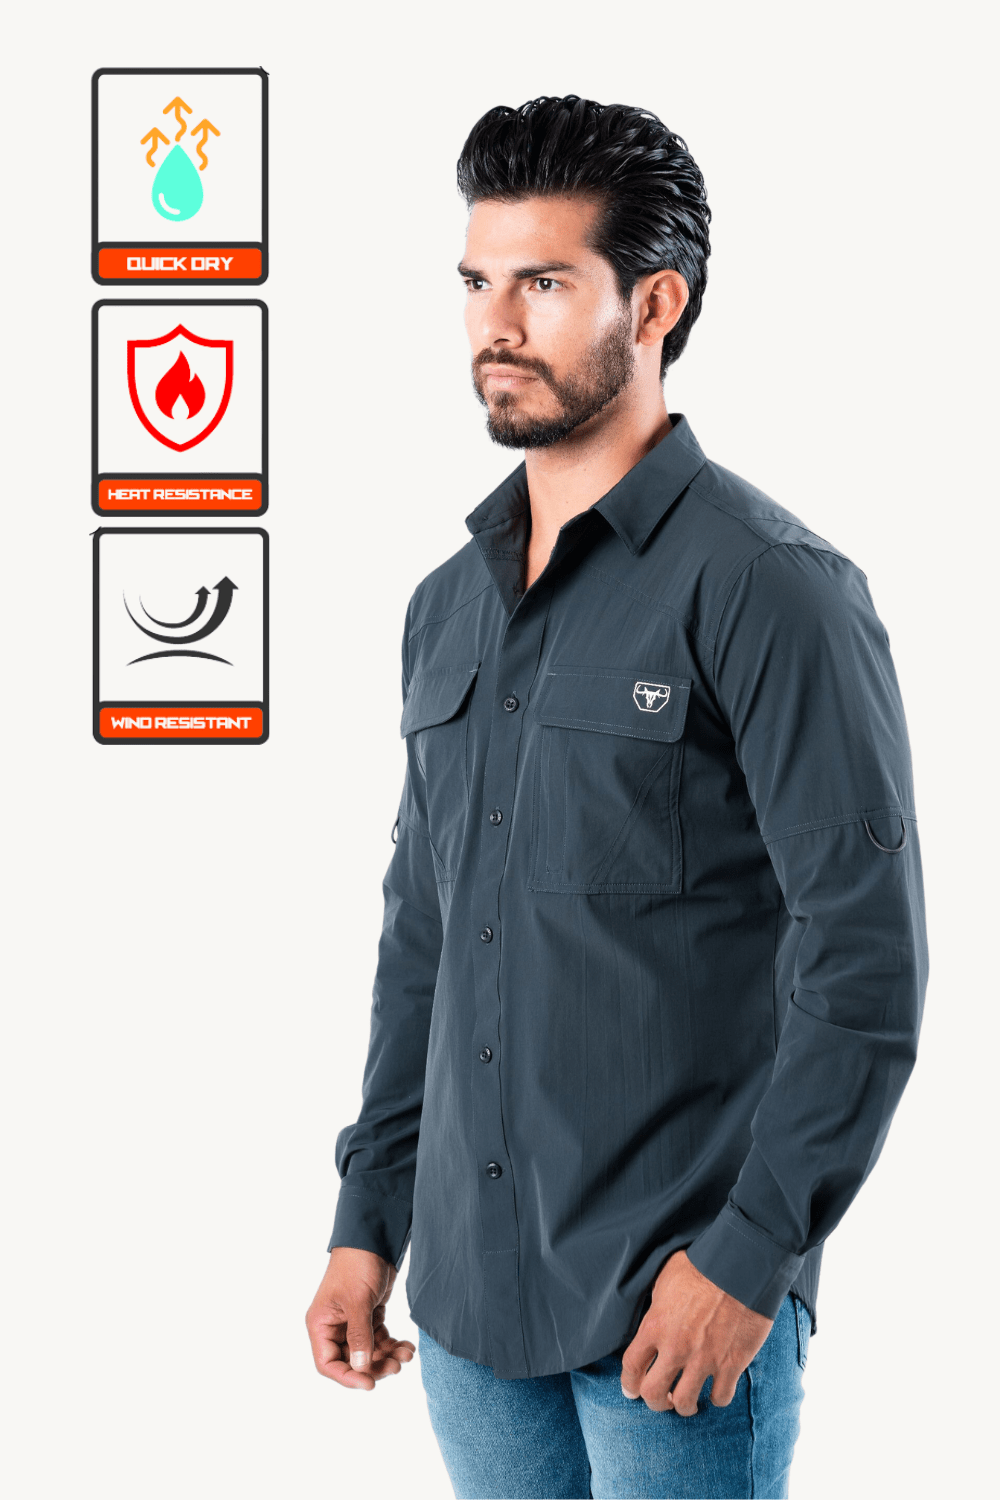 Men's Fishing Charcoal Long Sleeve Shirt | Size Large